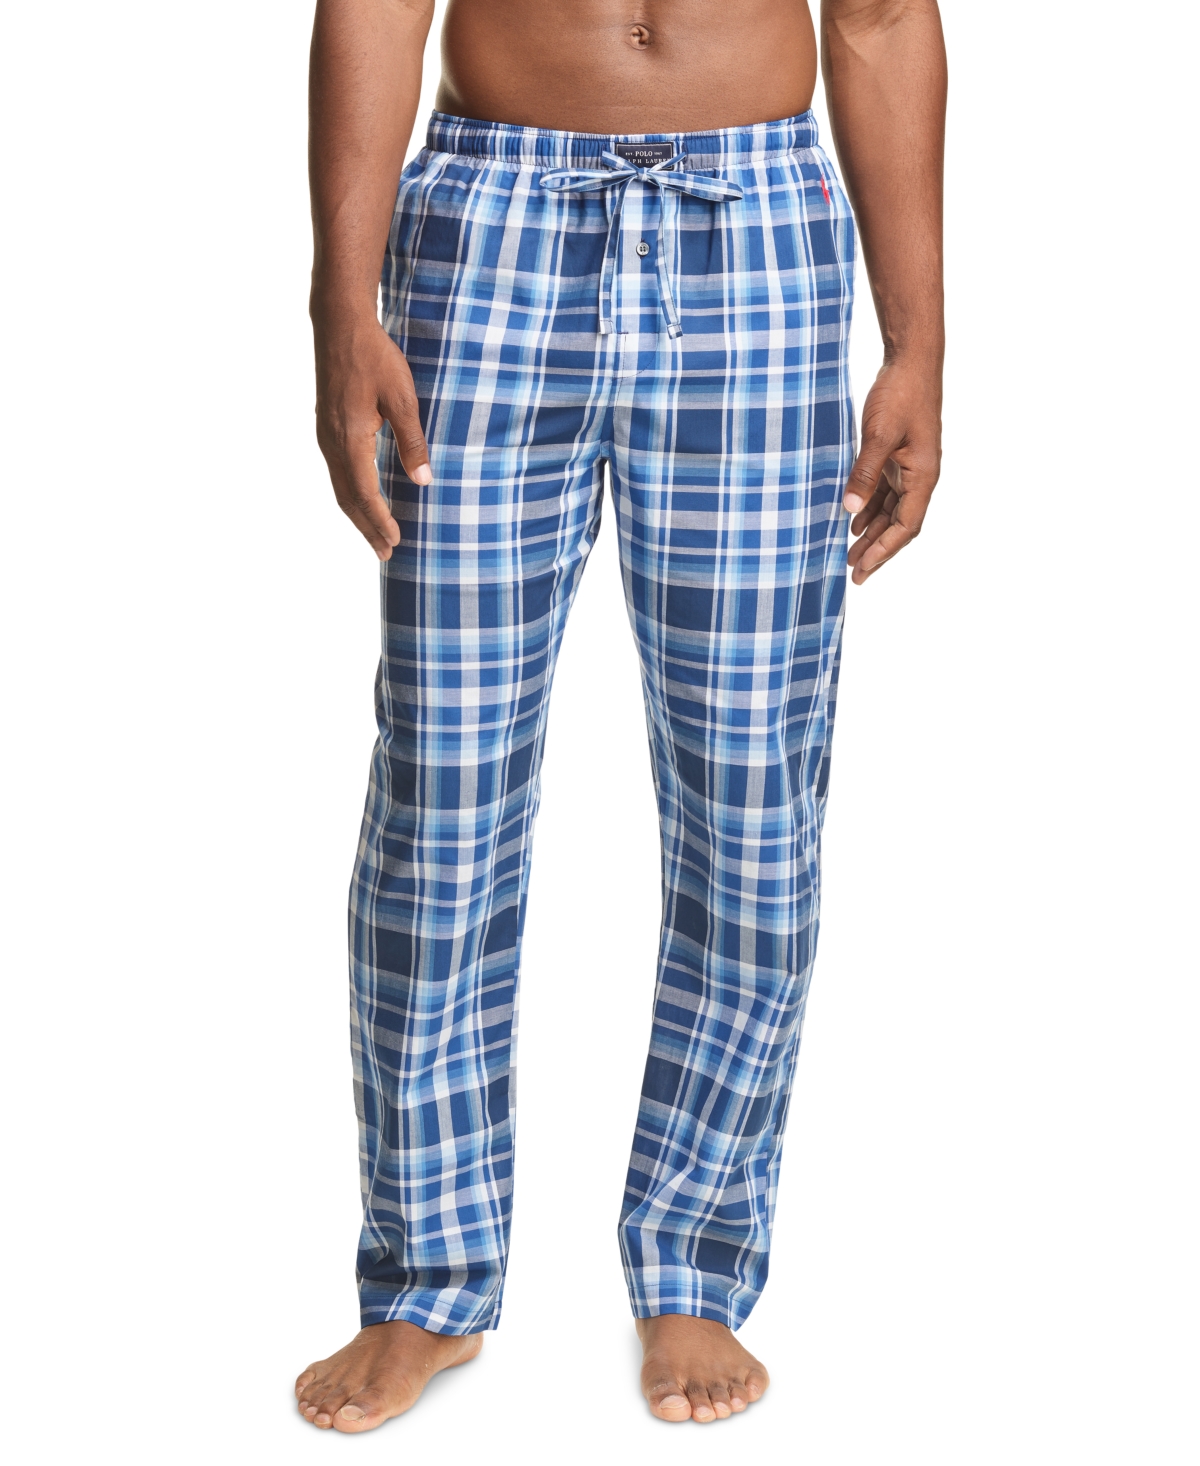 Men's Plaid Woven Pajama Pants - Monroe Plaid